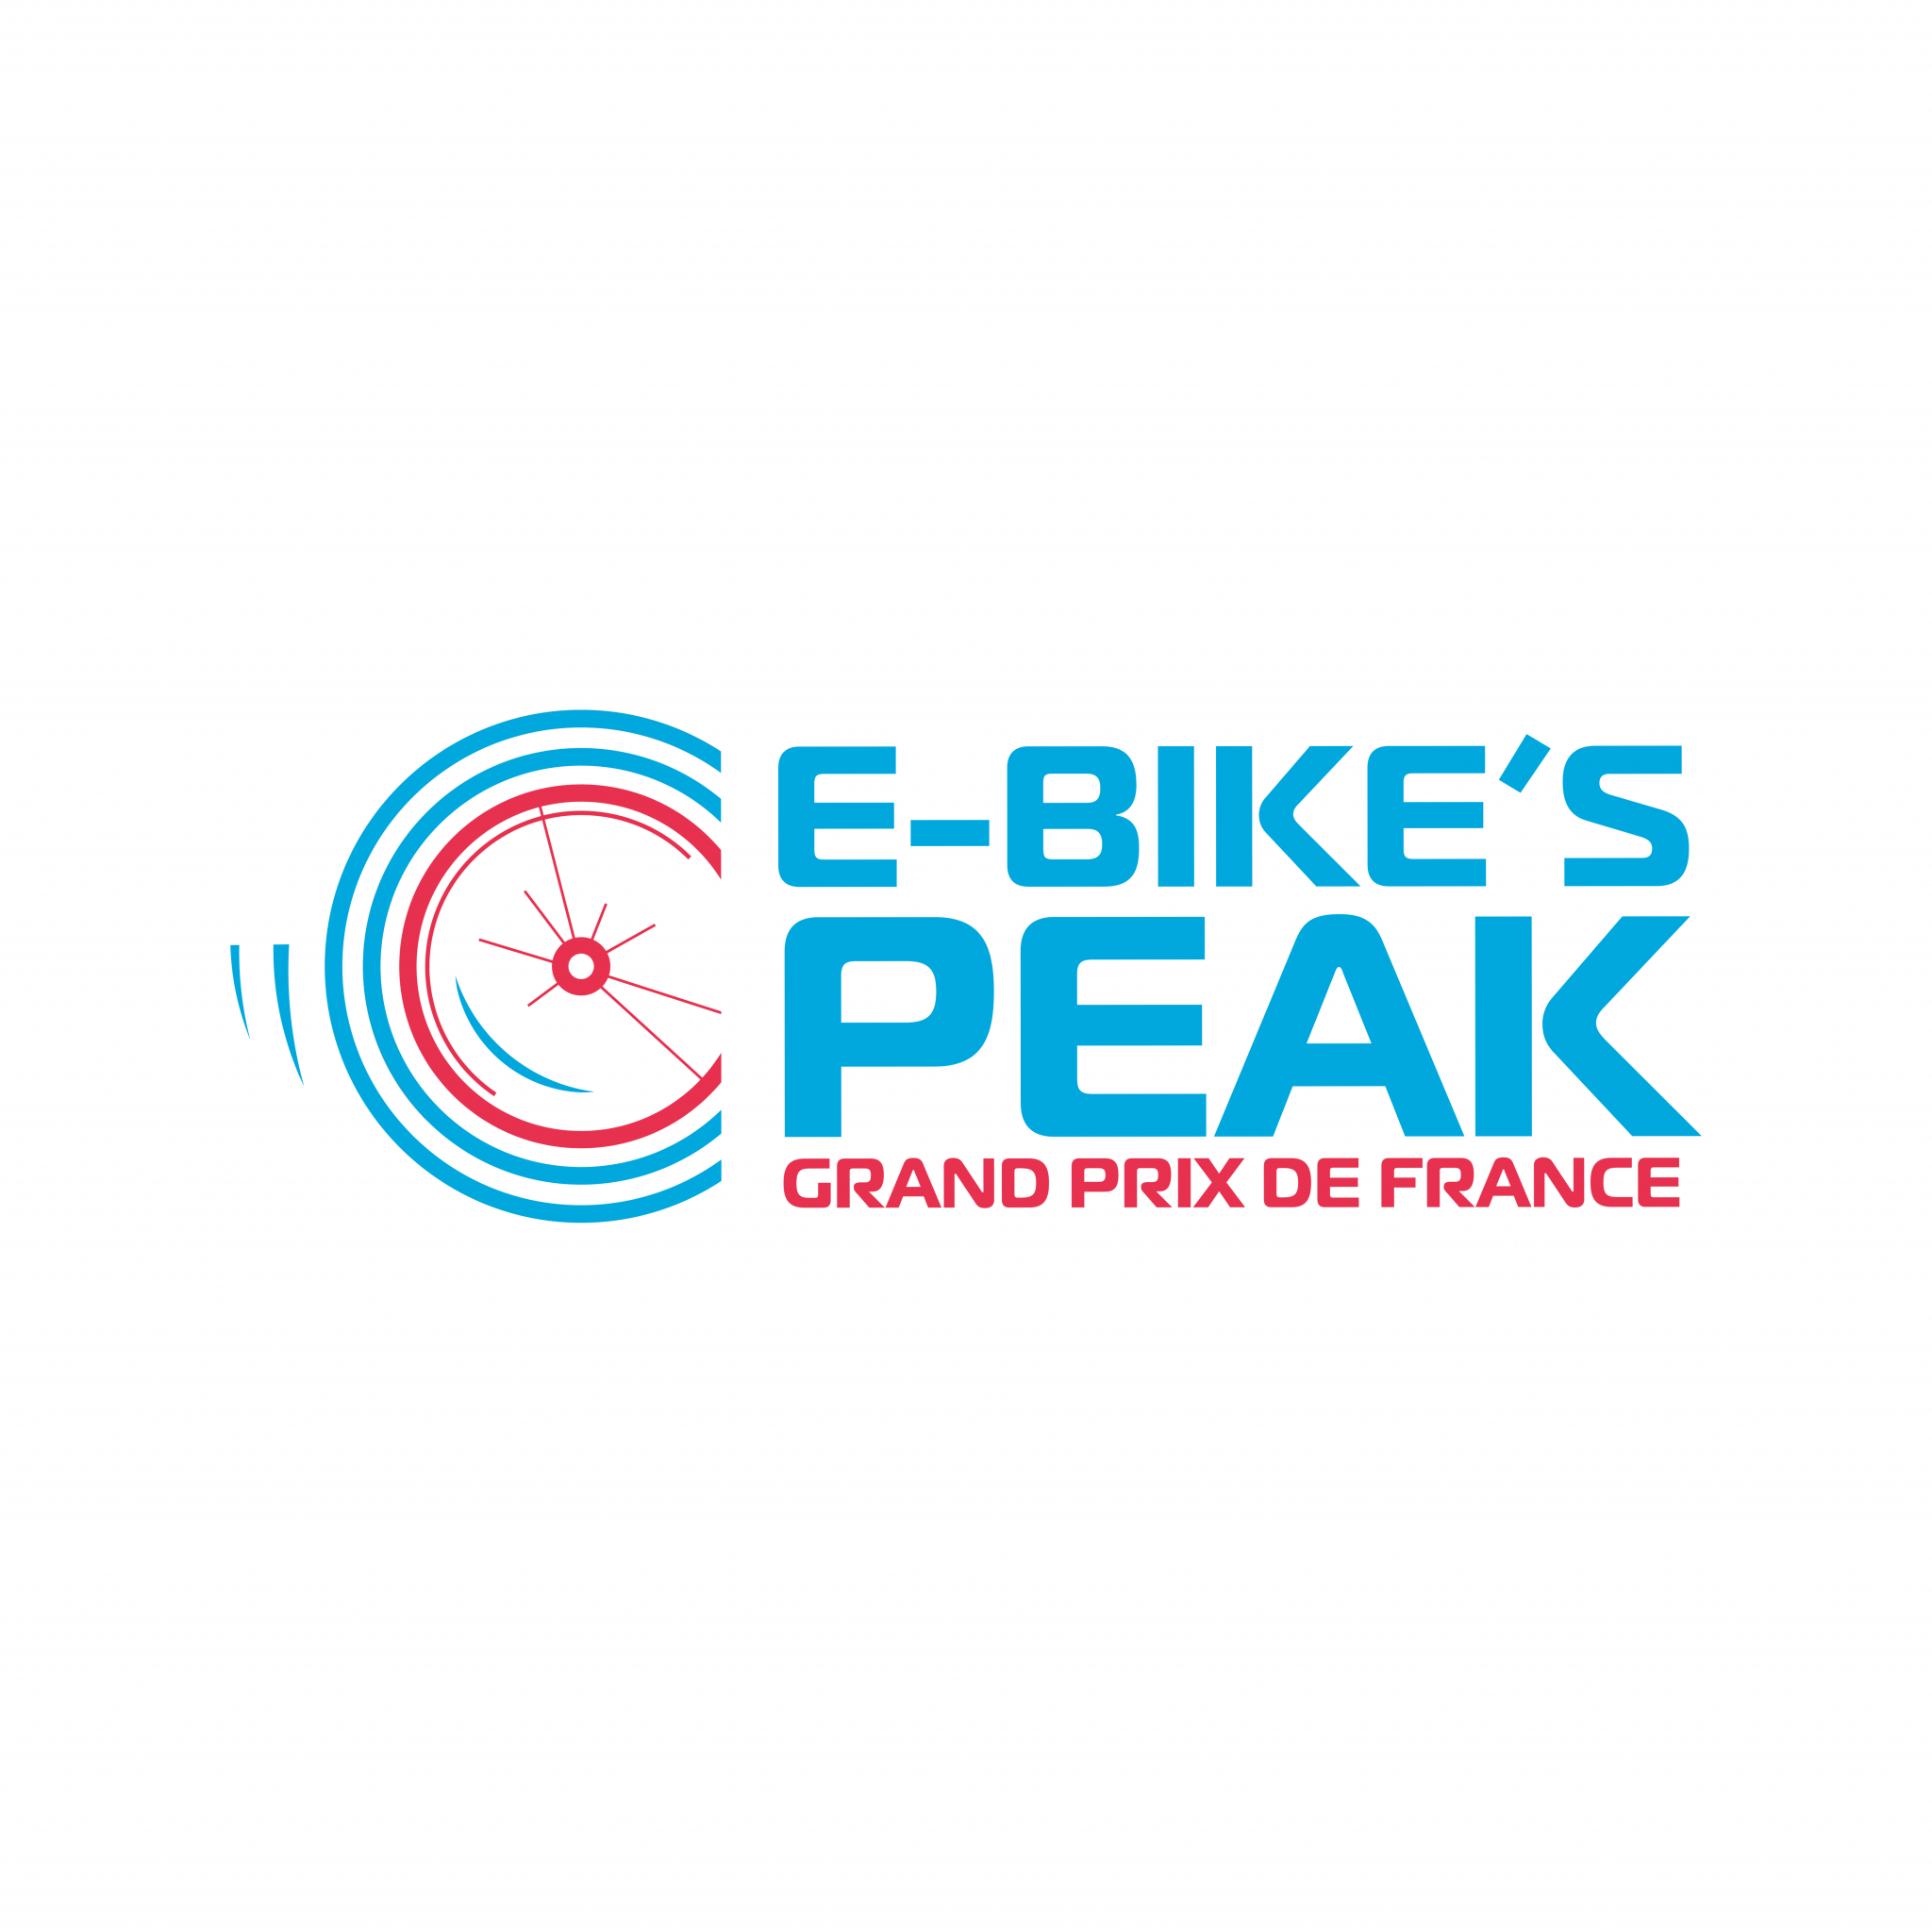 Bikes peak